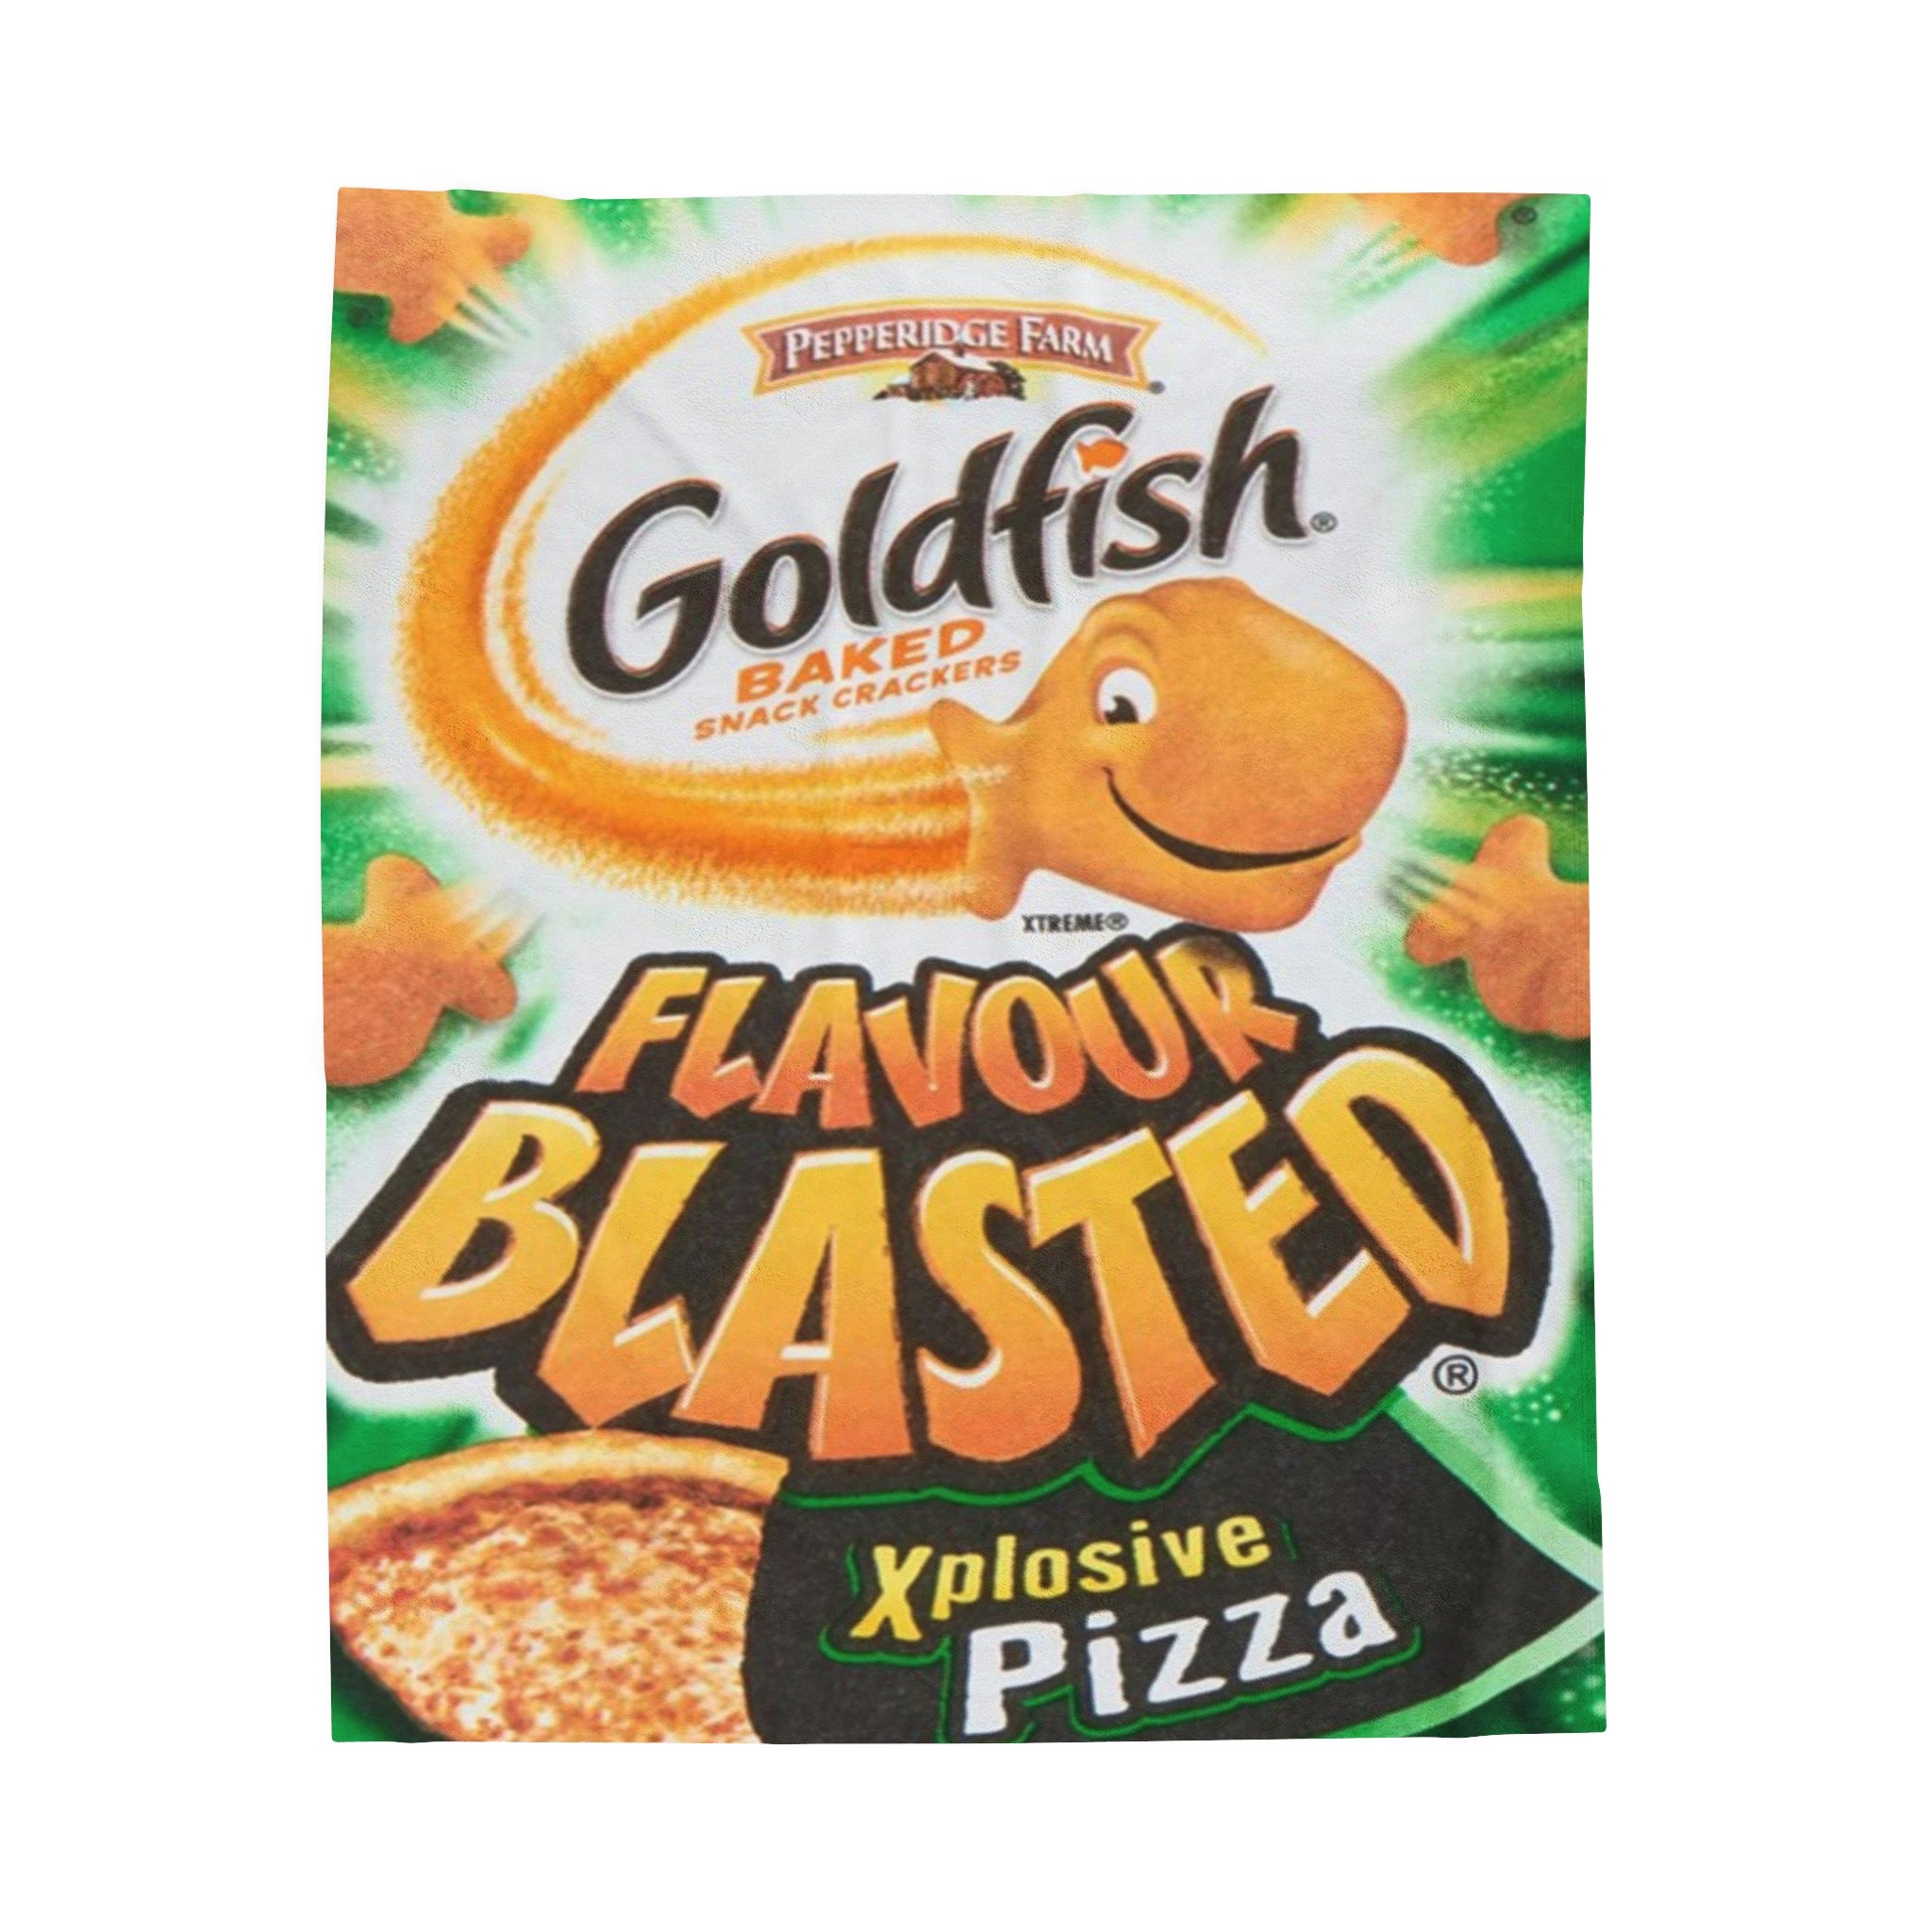 Goldfish Flavour Blasted Explosive Pizza Blanket